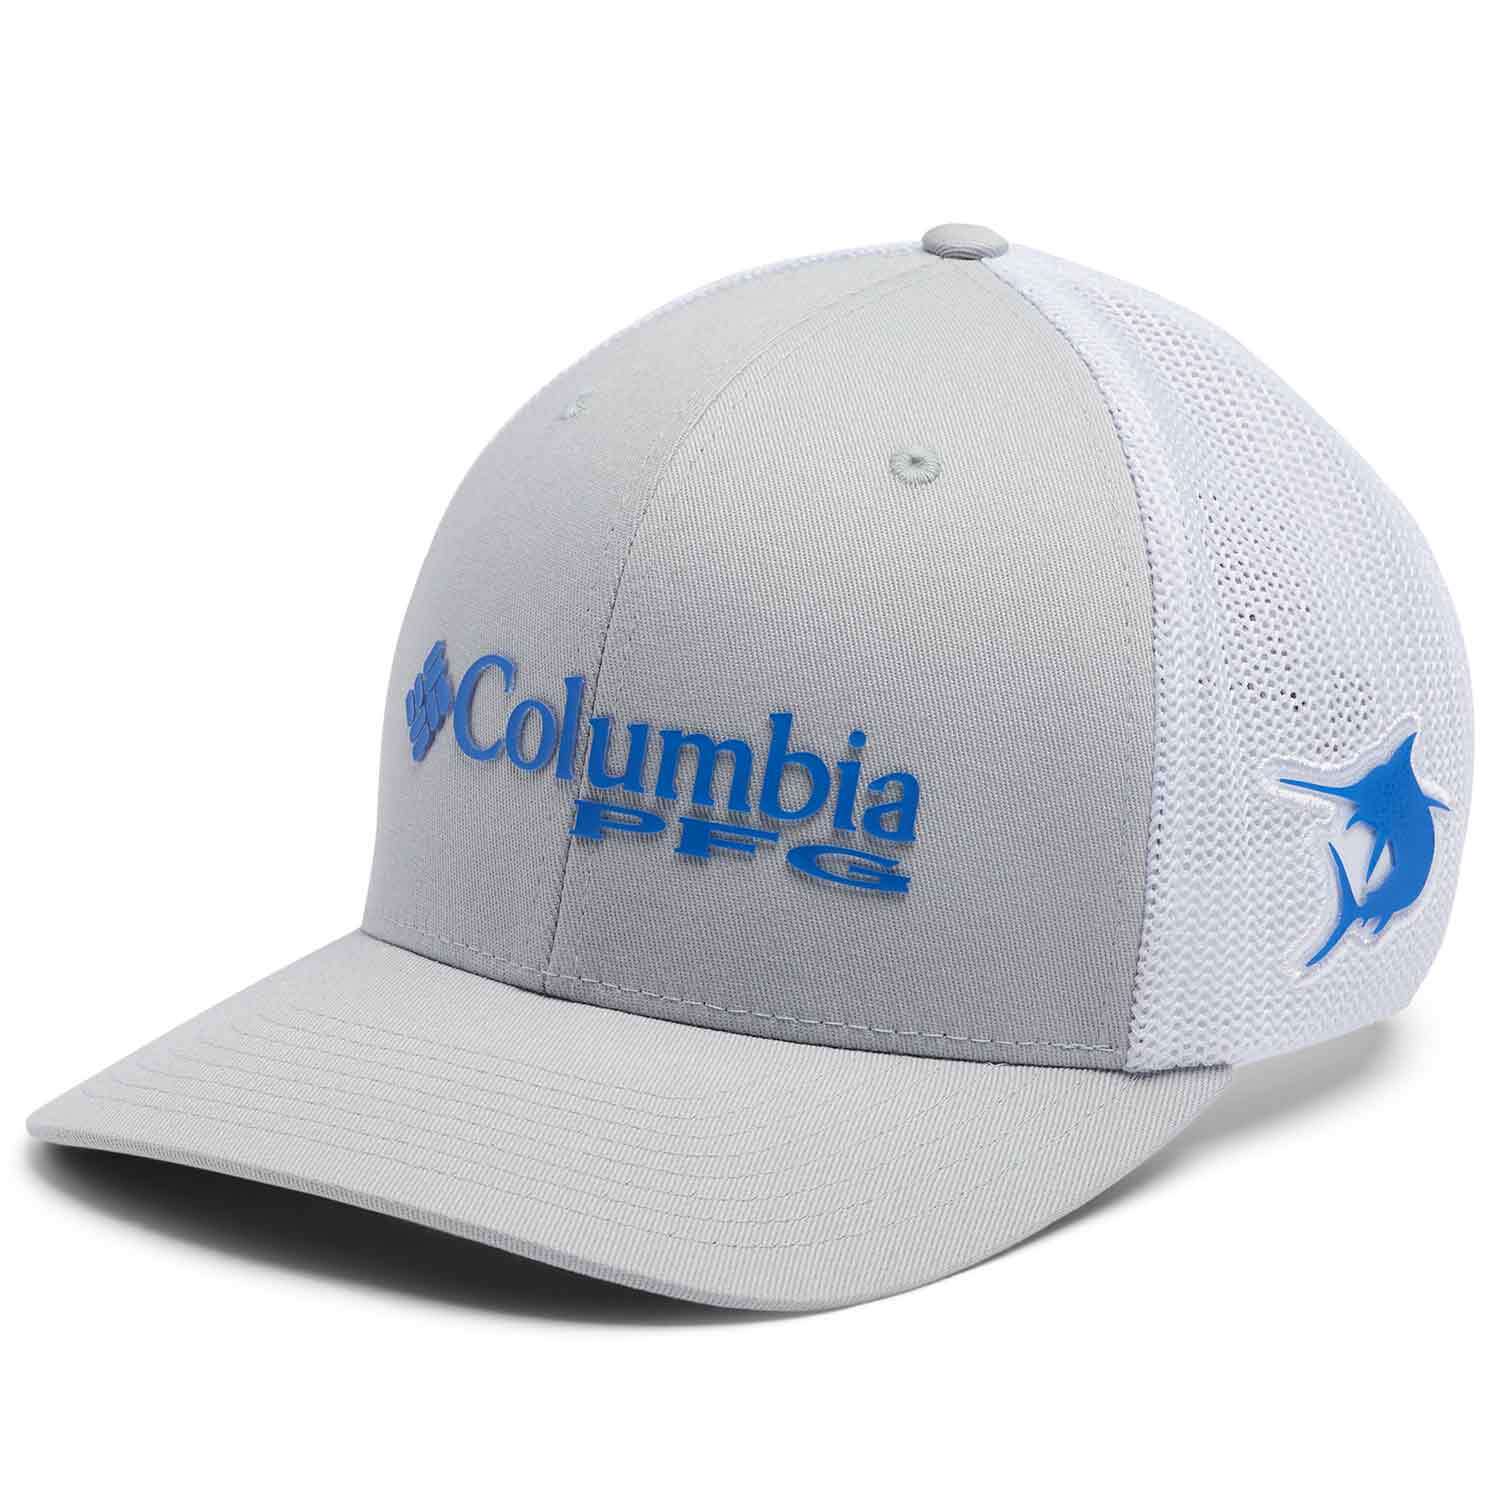  Columbia Womens PFG Mesh Ball Cap, Black, Small-Medium US :  Sports & Outdoors